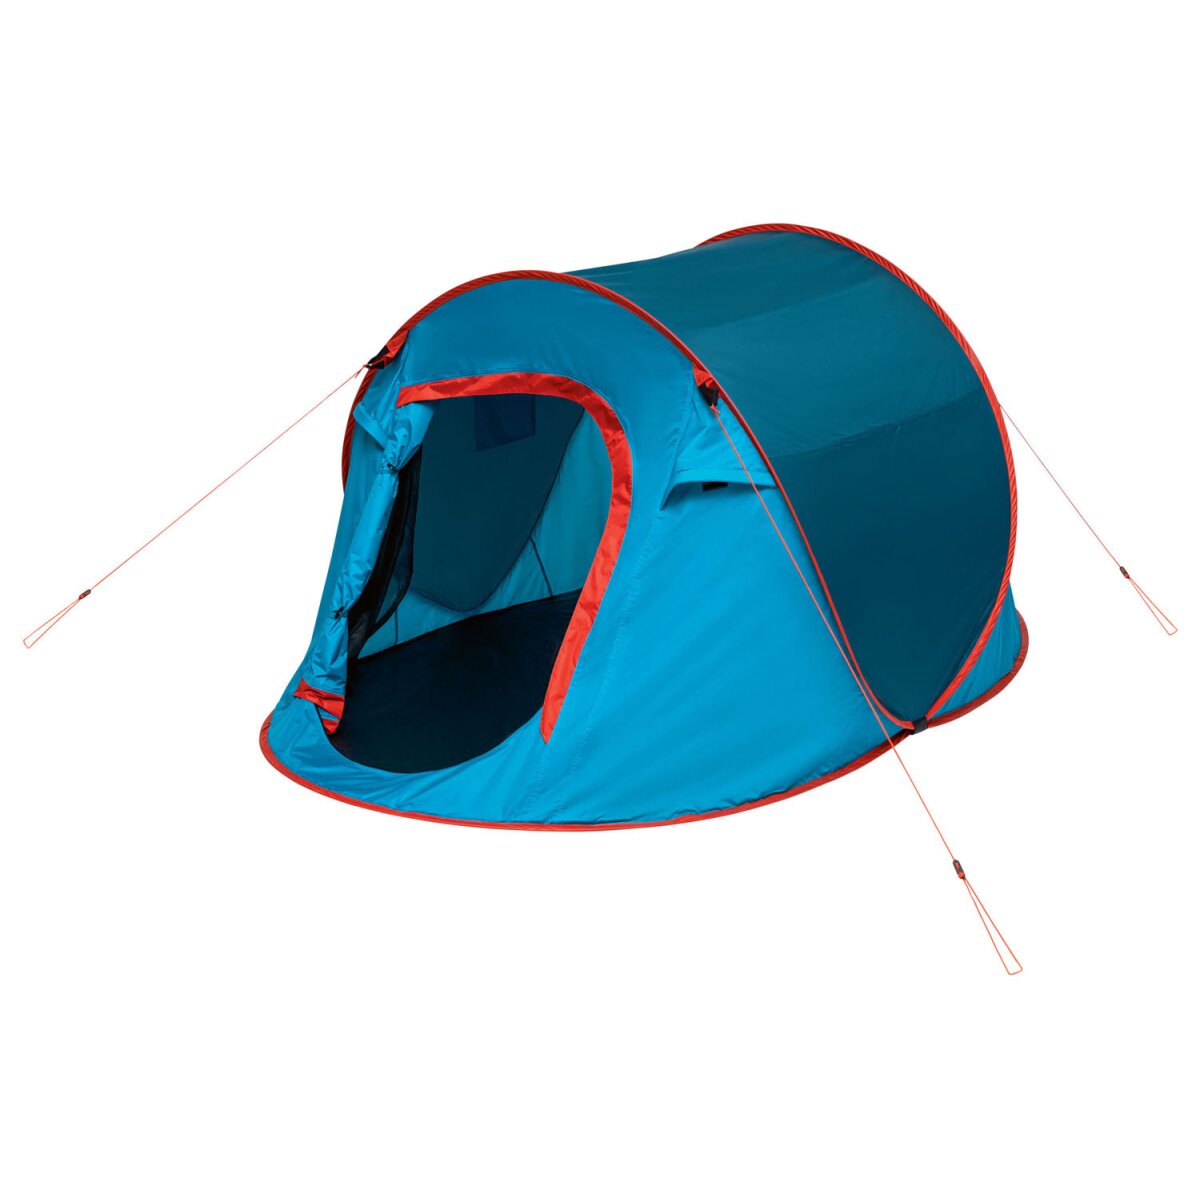 Rocktrail Campingzelt Pop-Up, für 2 Personen - B-Ware, 16,99 €